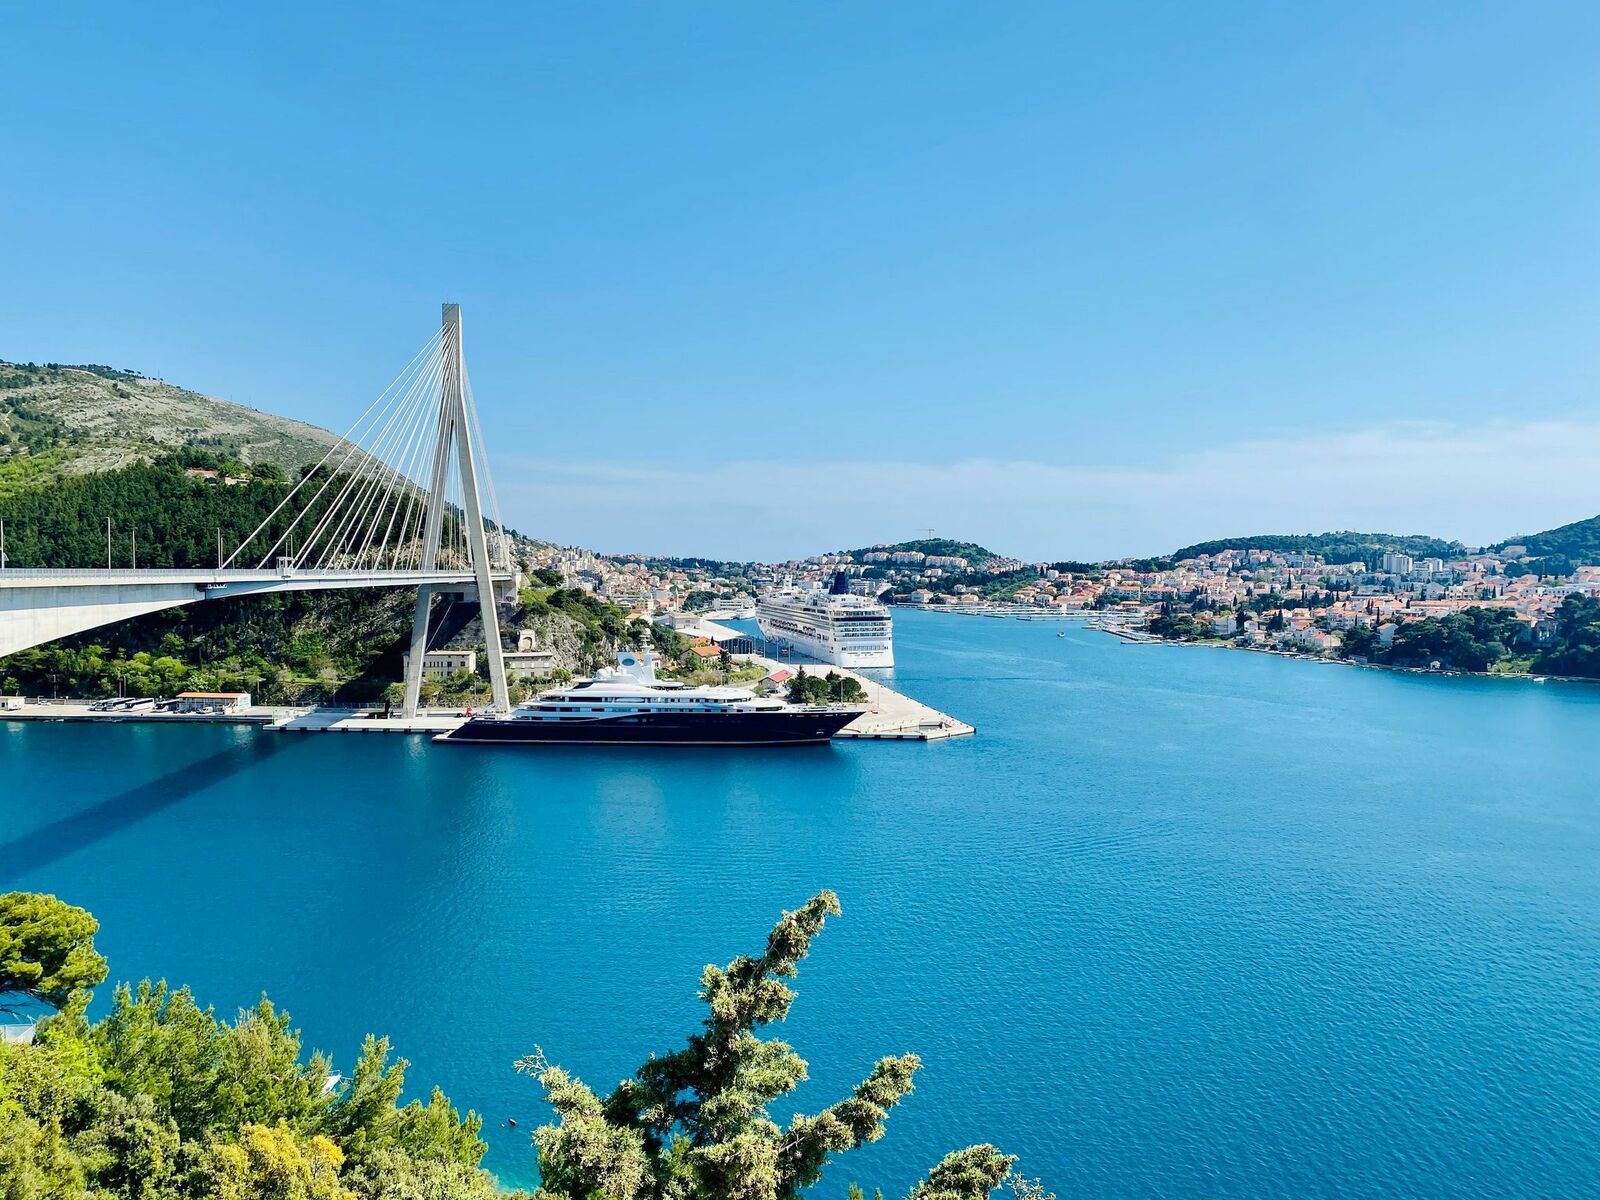 3. Port de Dubrovnik - Marjorie D. Lafond